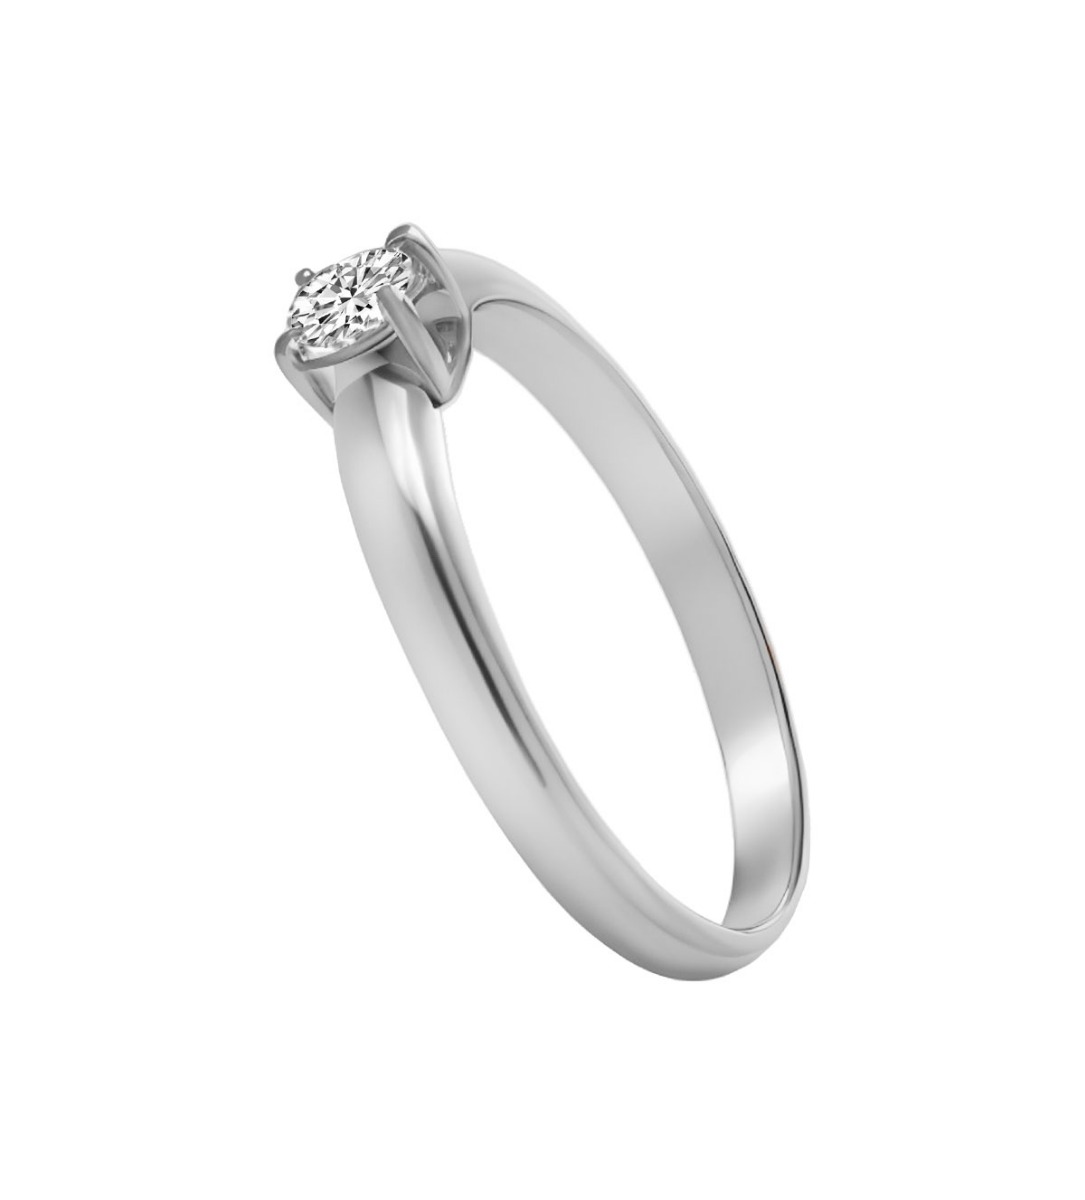 anillo compromiso oro blanco 18 kilates con diamante talla brillante de 0,25 quilates fotografia para joyeria online el rubi joyeros toma lateral